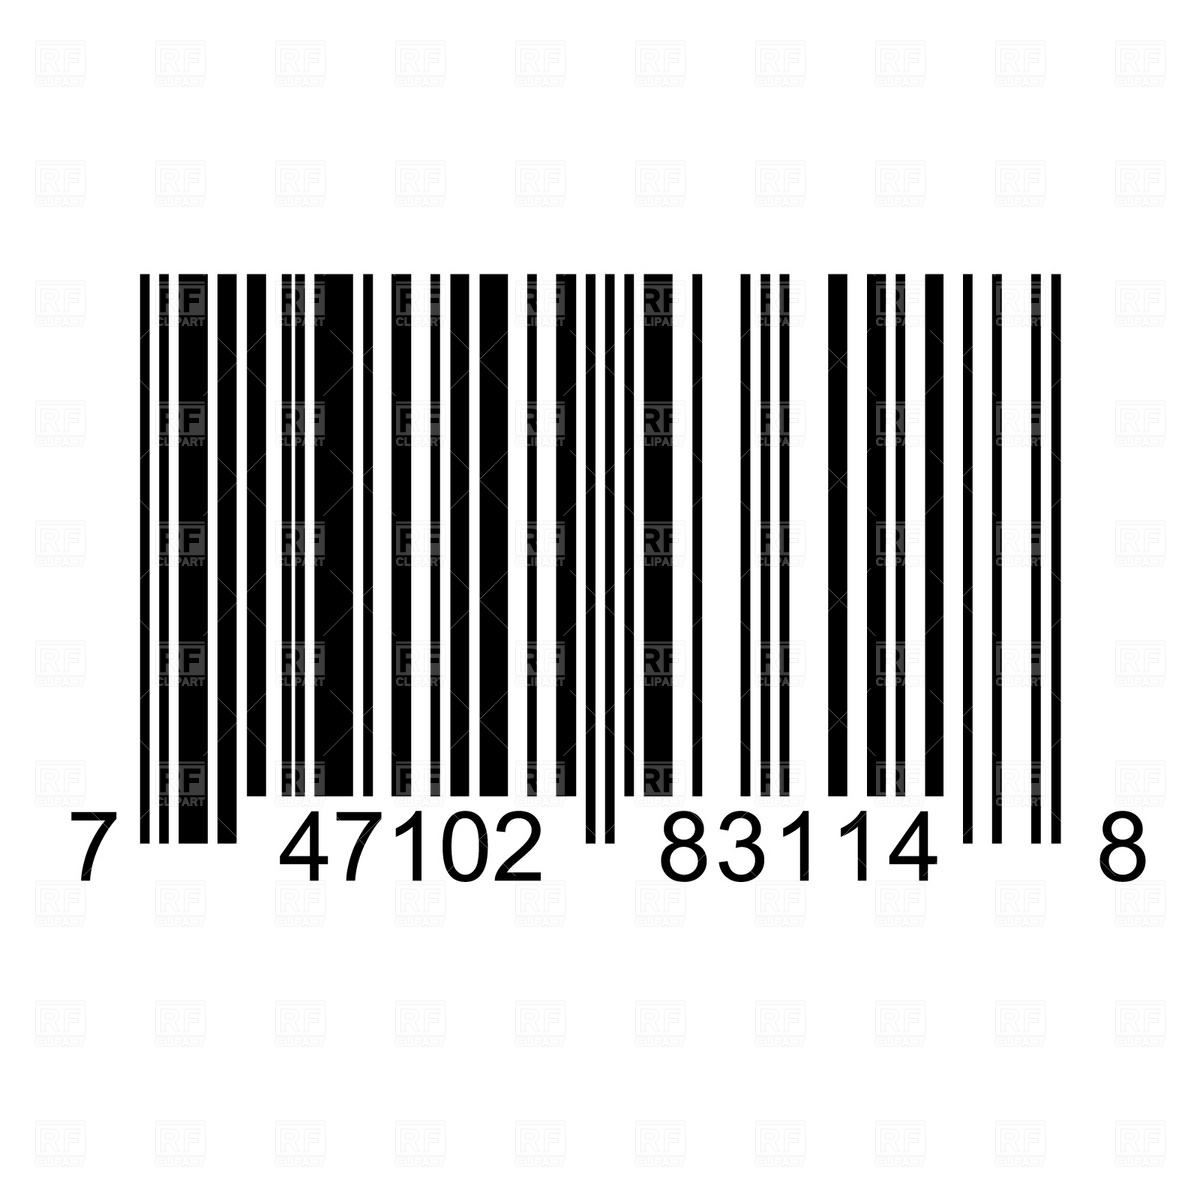 Free Vector Clip Art of a Barcode